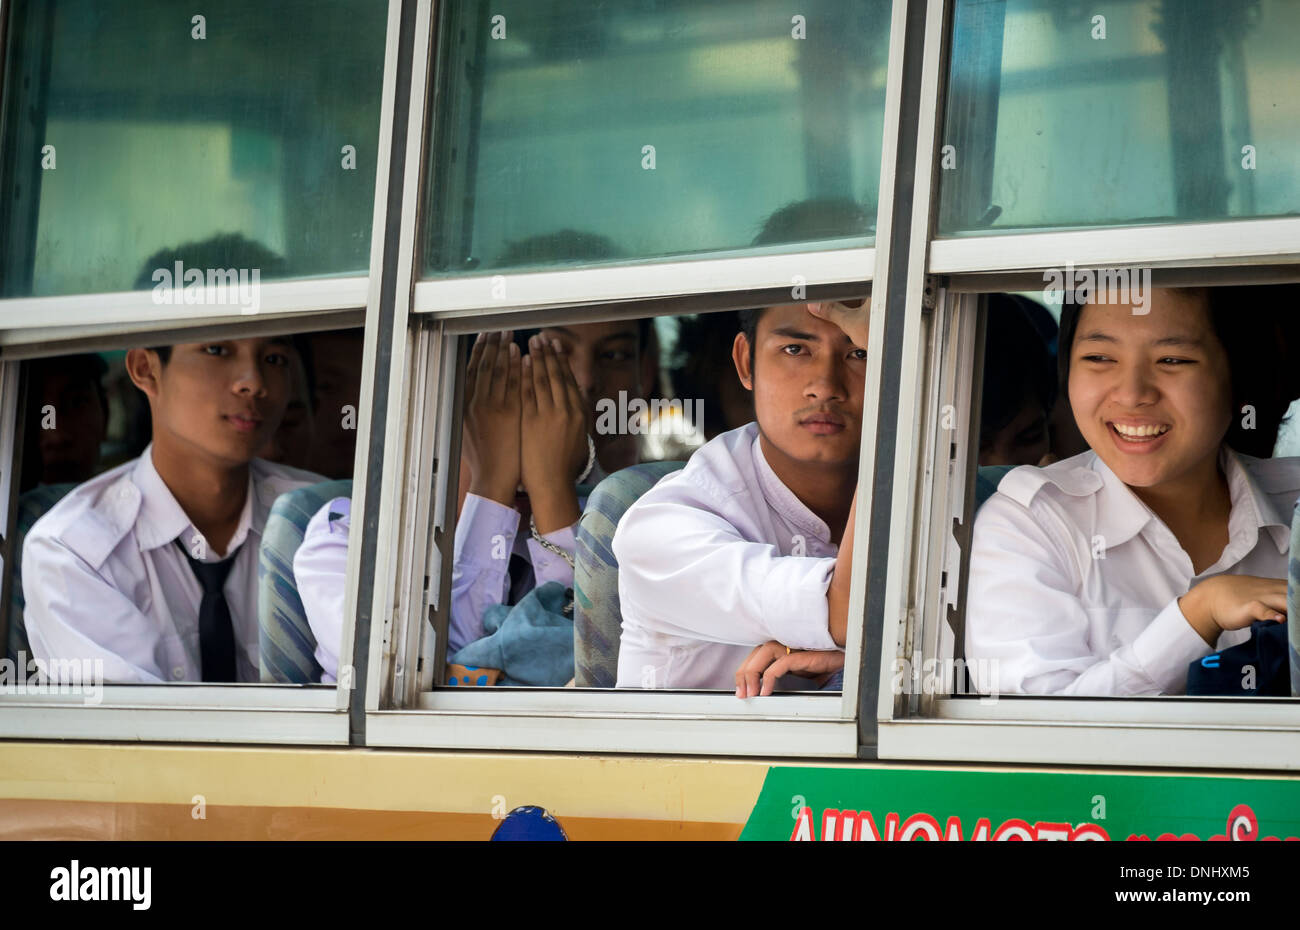 YANGON, MYANMAR - CIRCA DECEMBER 2013: Passengers looking through a bus window in a busy street in Yangon. Stock Photo